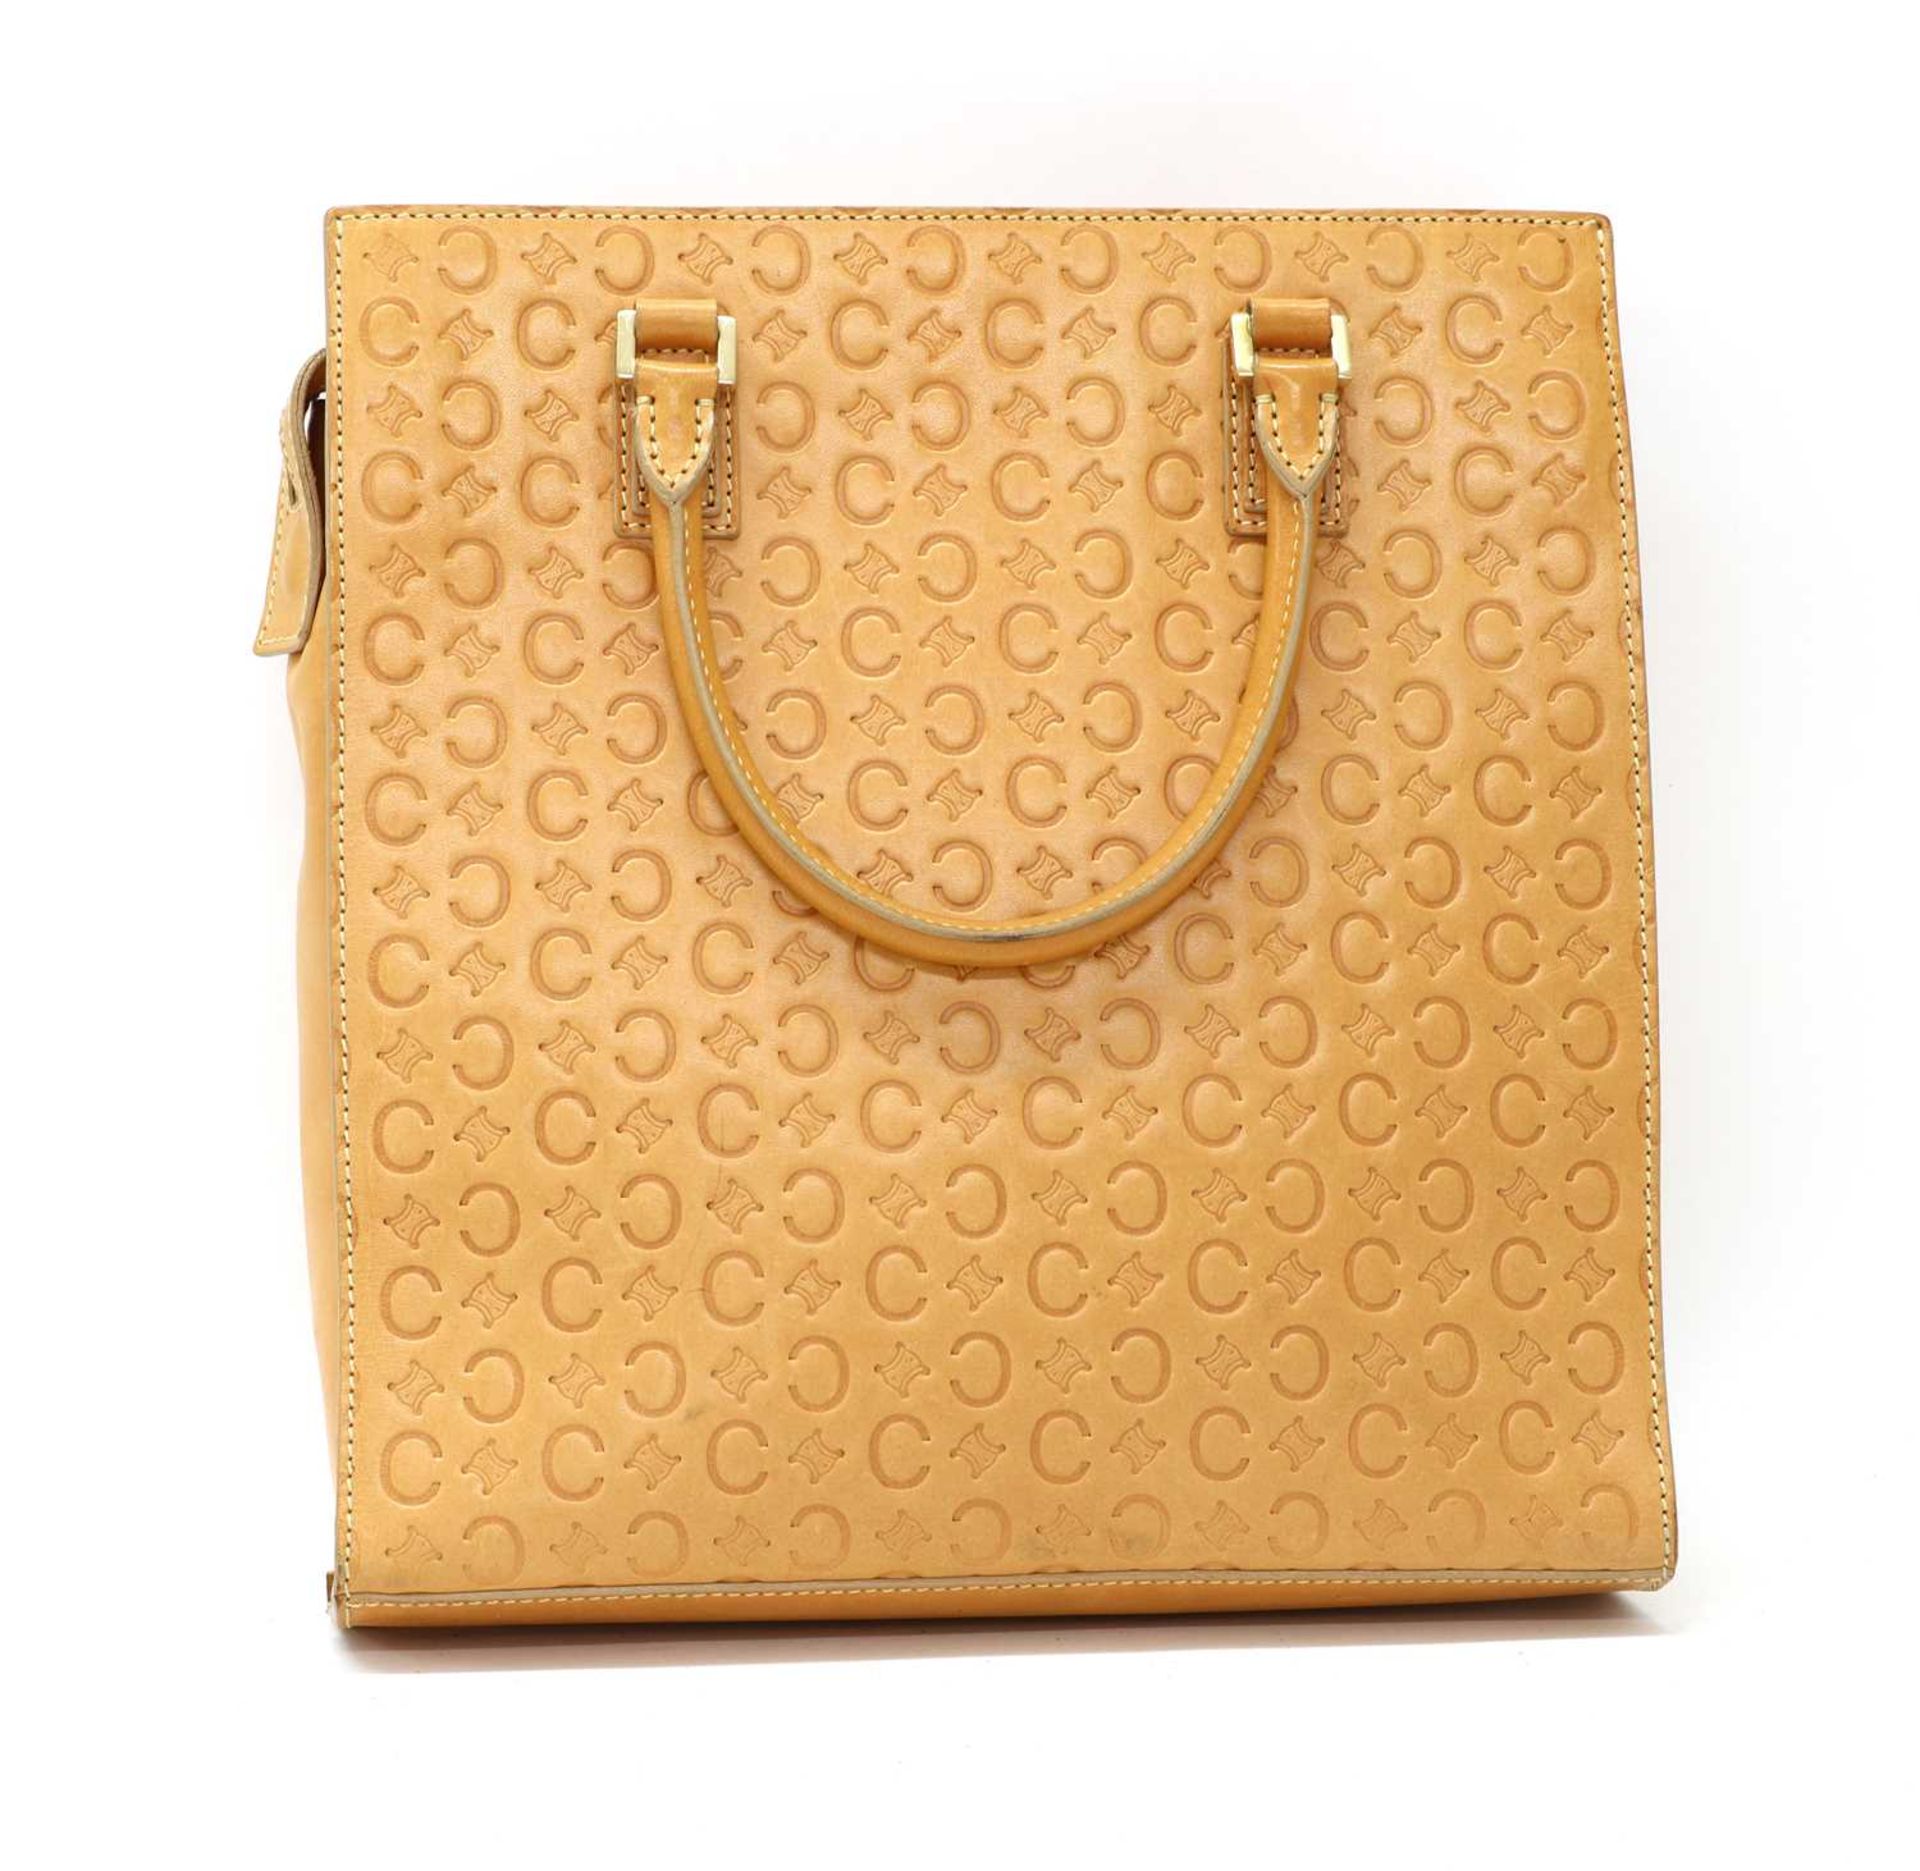 A Celine tan leather blason pattern handbag, - Bild 2 aus 3